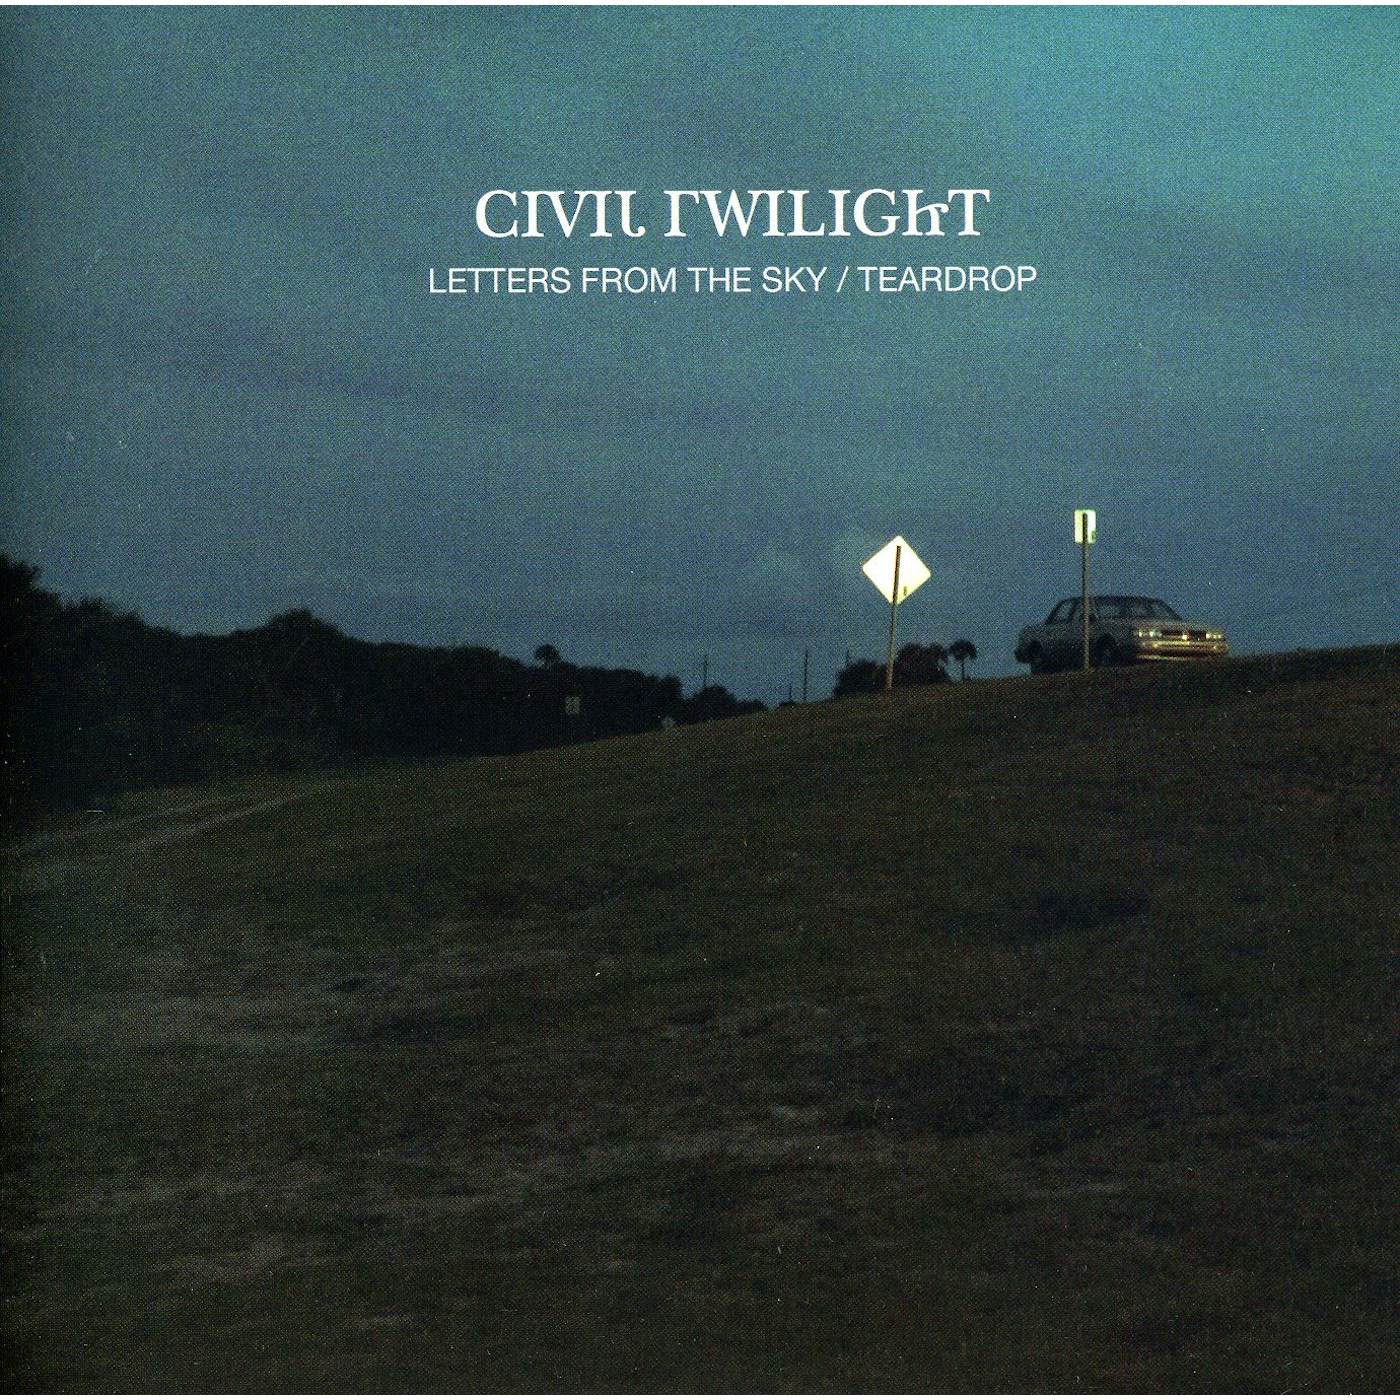 Civil Twilight LETTERS FROM THE SKY / TEARDROP Vinyl Record